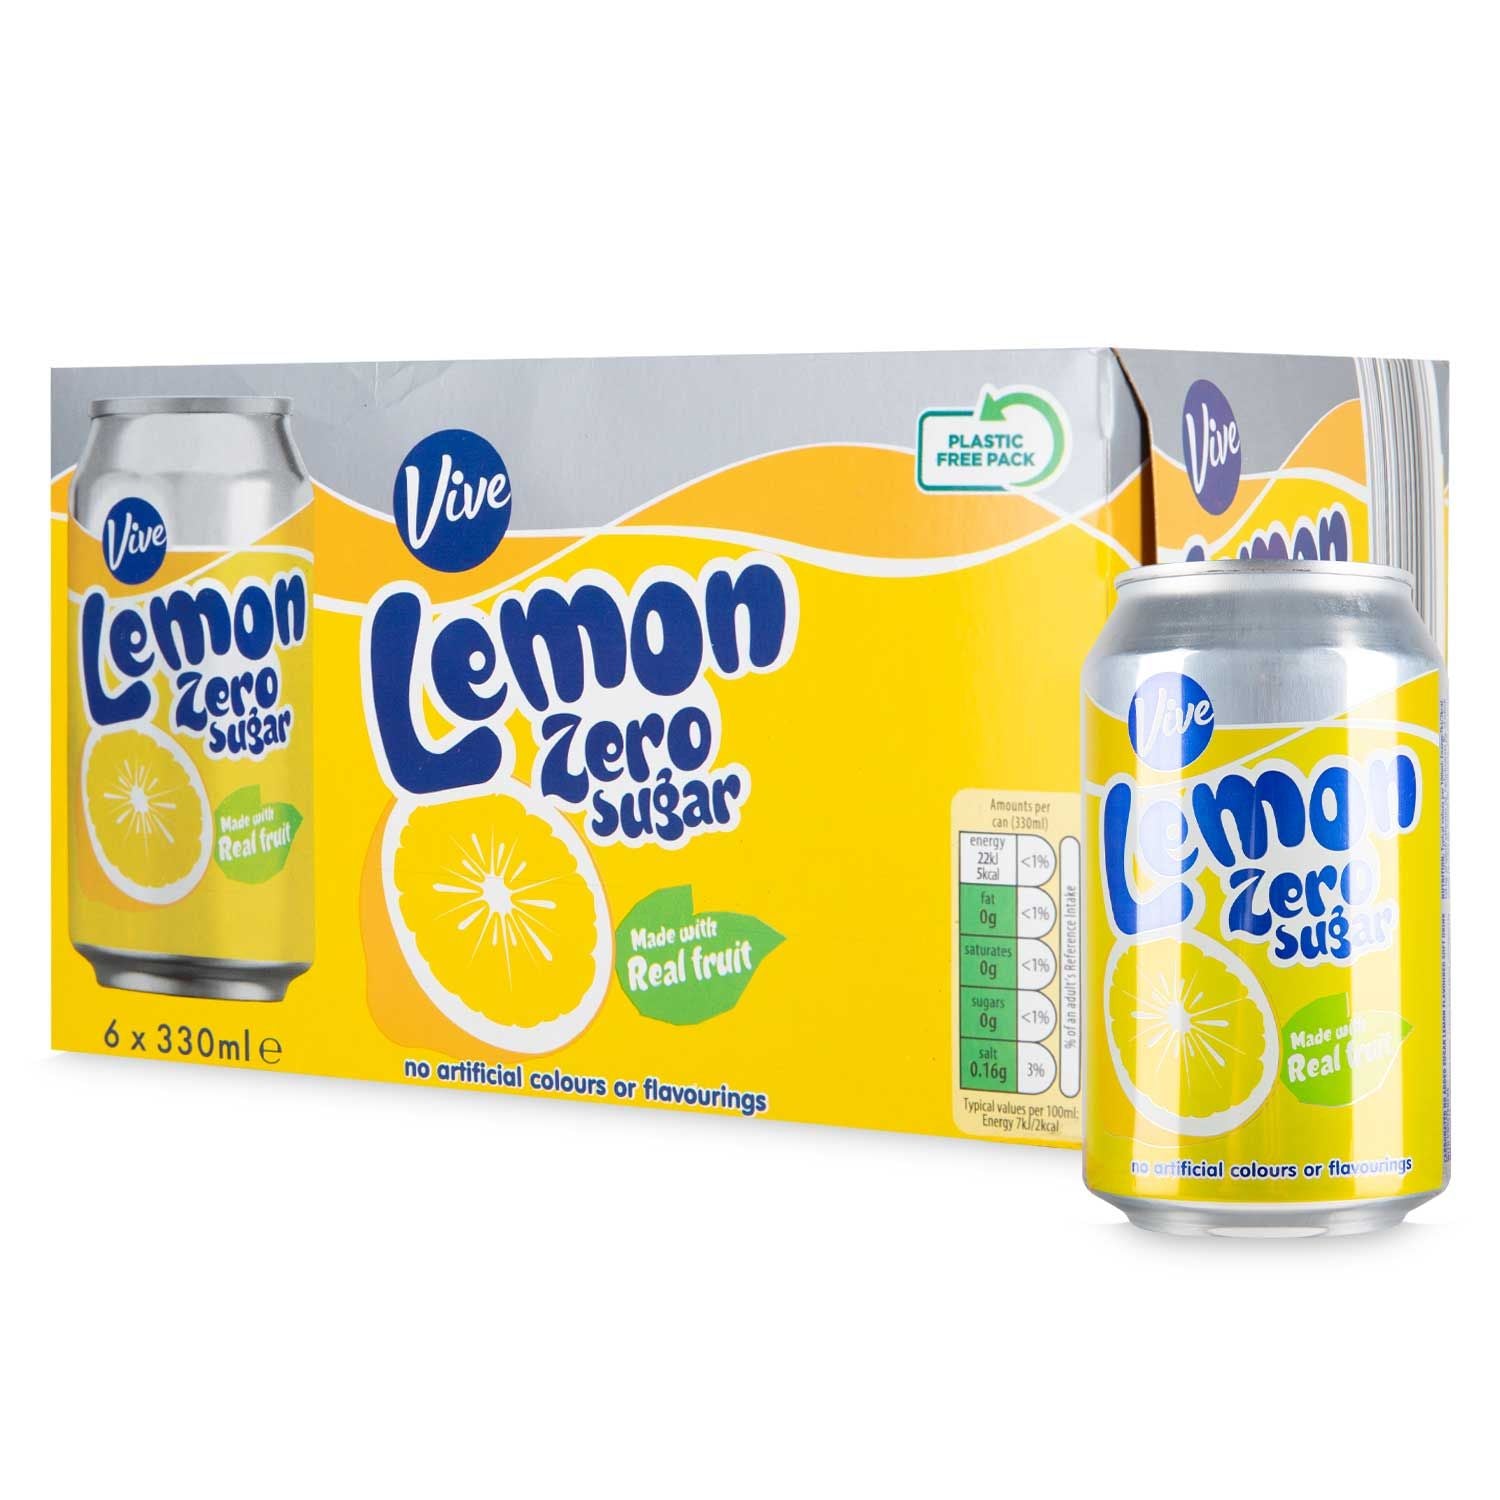 WSO - Vive Multipack Lemon Cans 330ml/6 X4 Pack